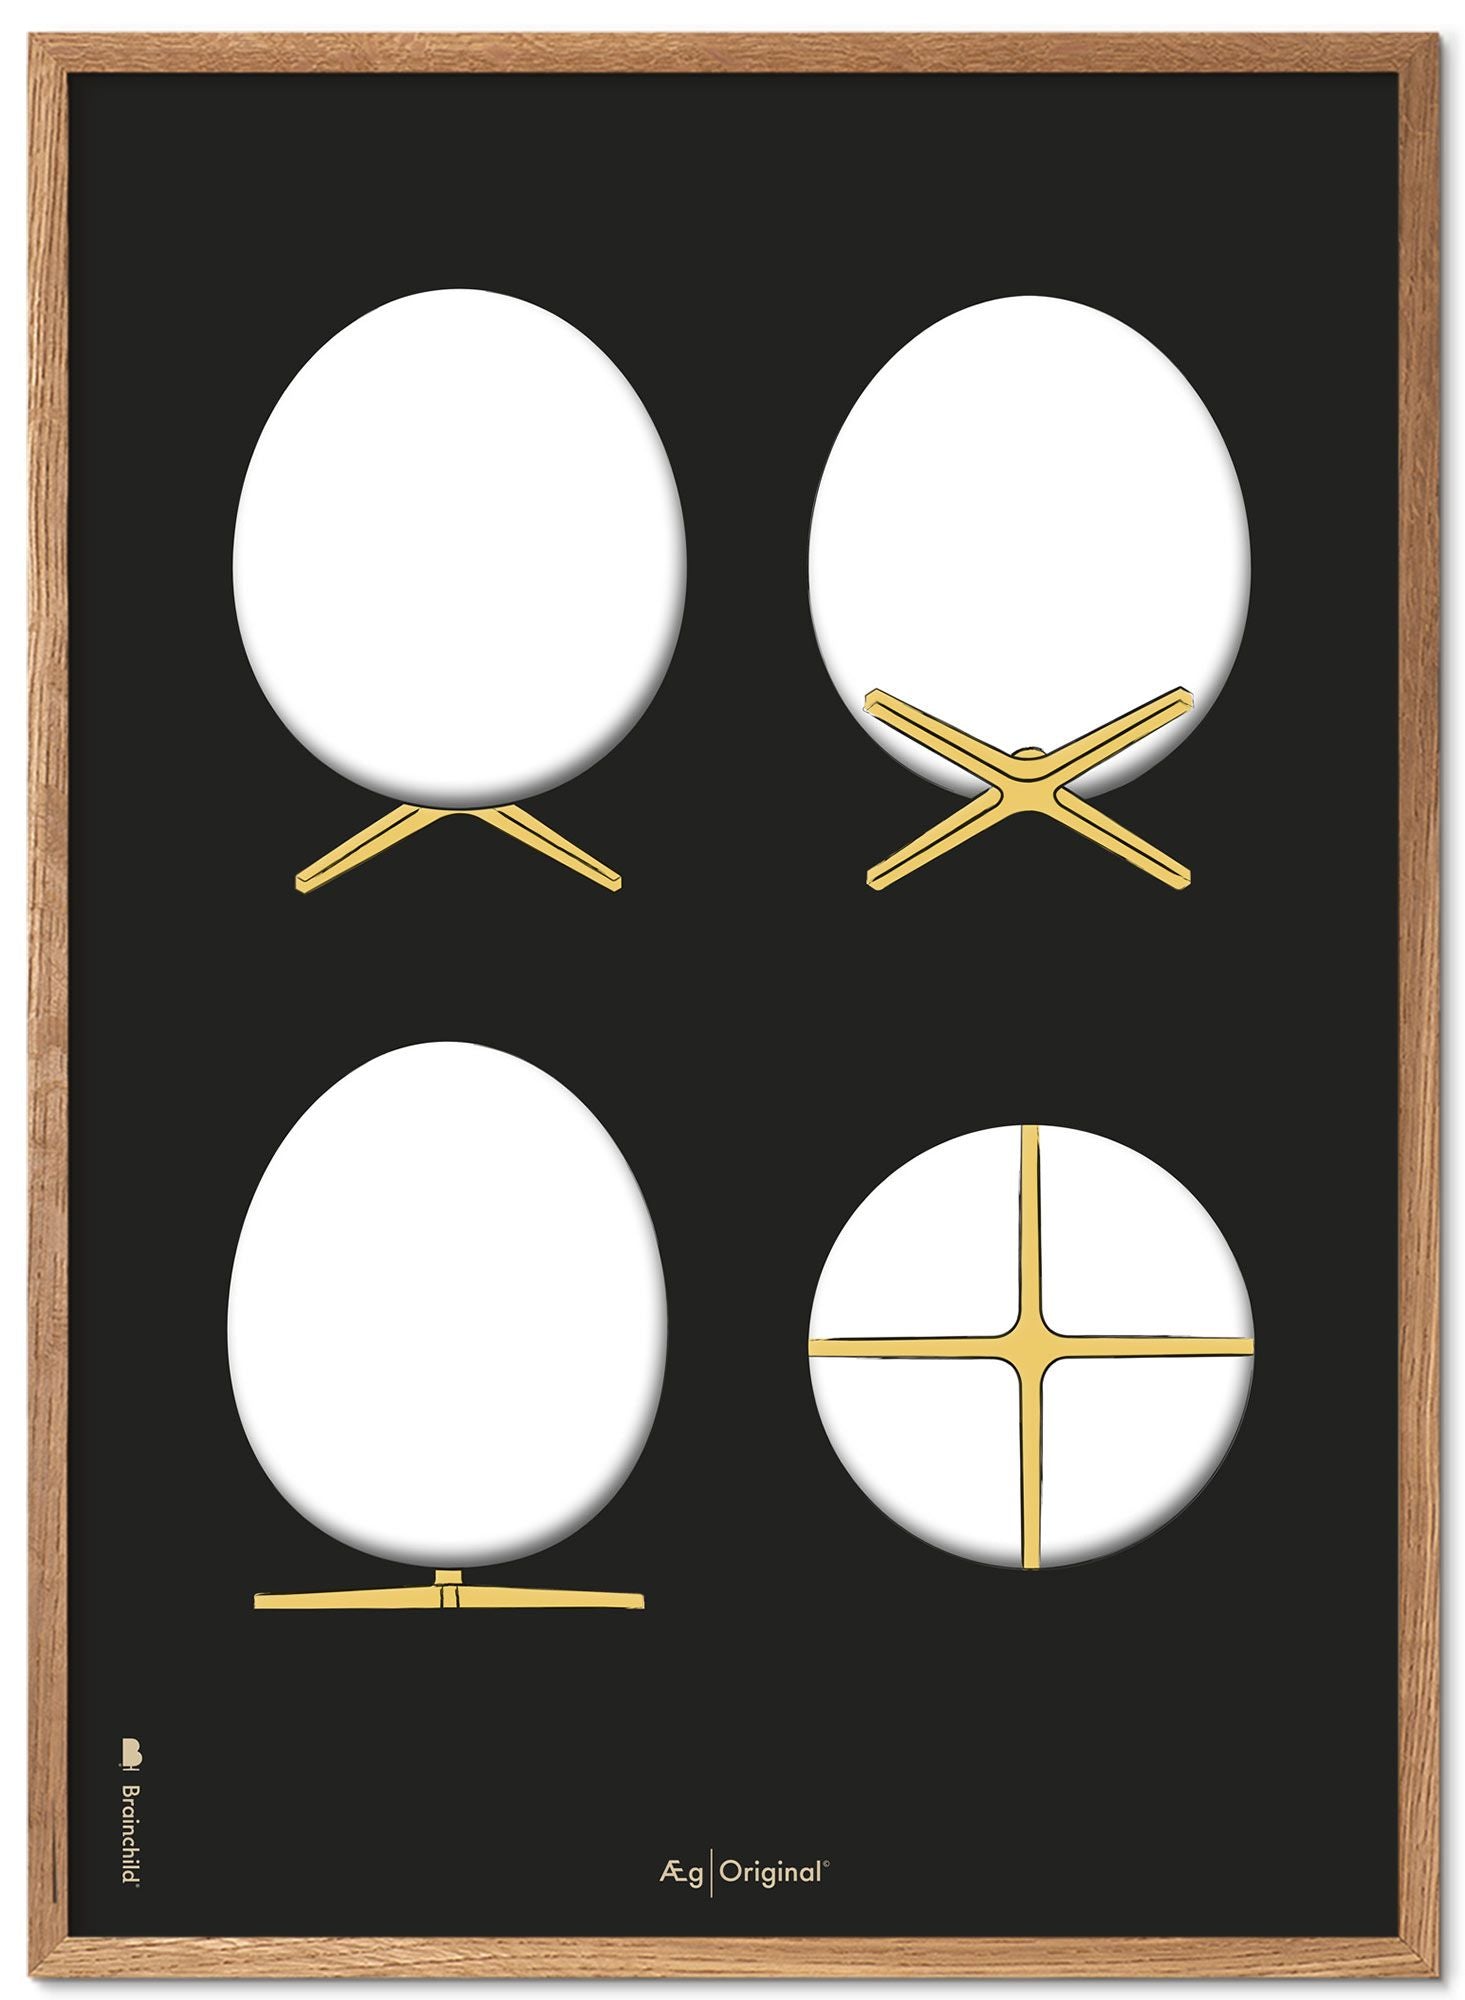 Brainchild The Egg Design Sketches Poster Frame Made Of Light Wood 30x40 Cm, Black Background